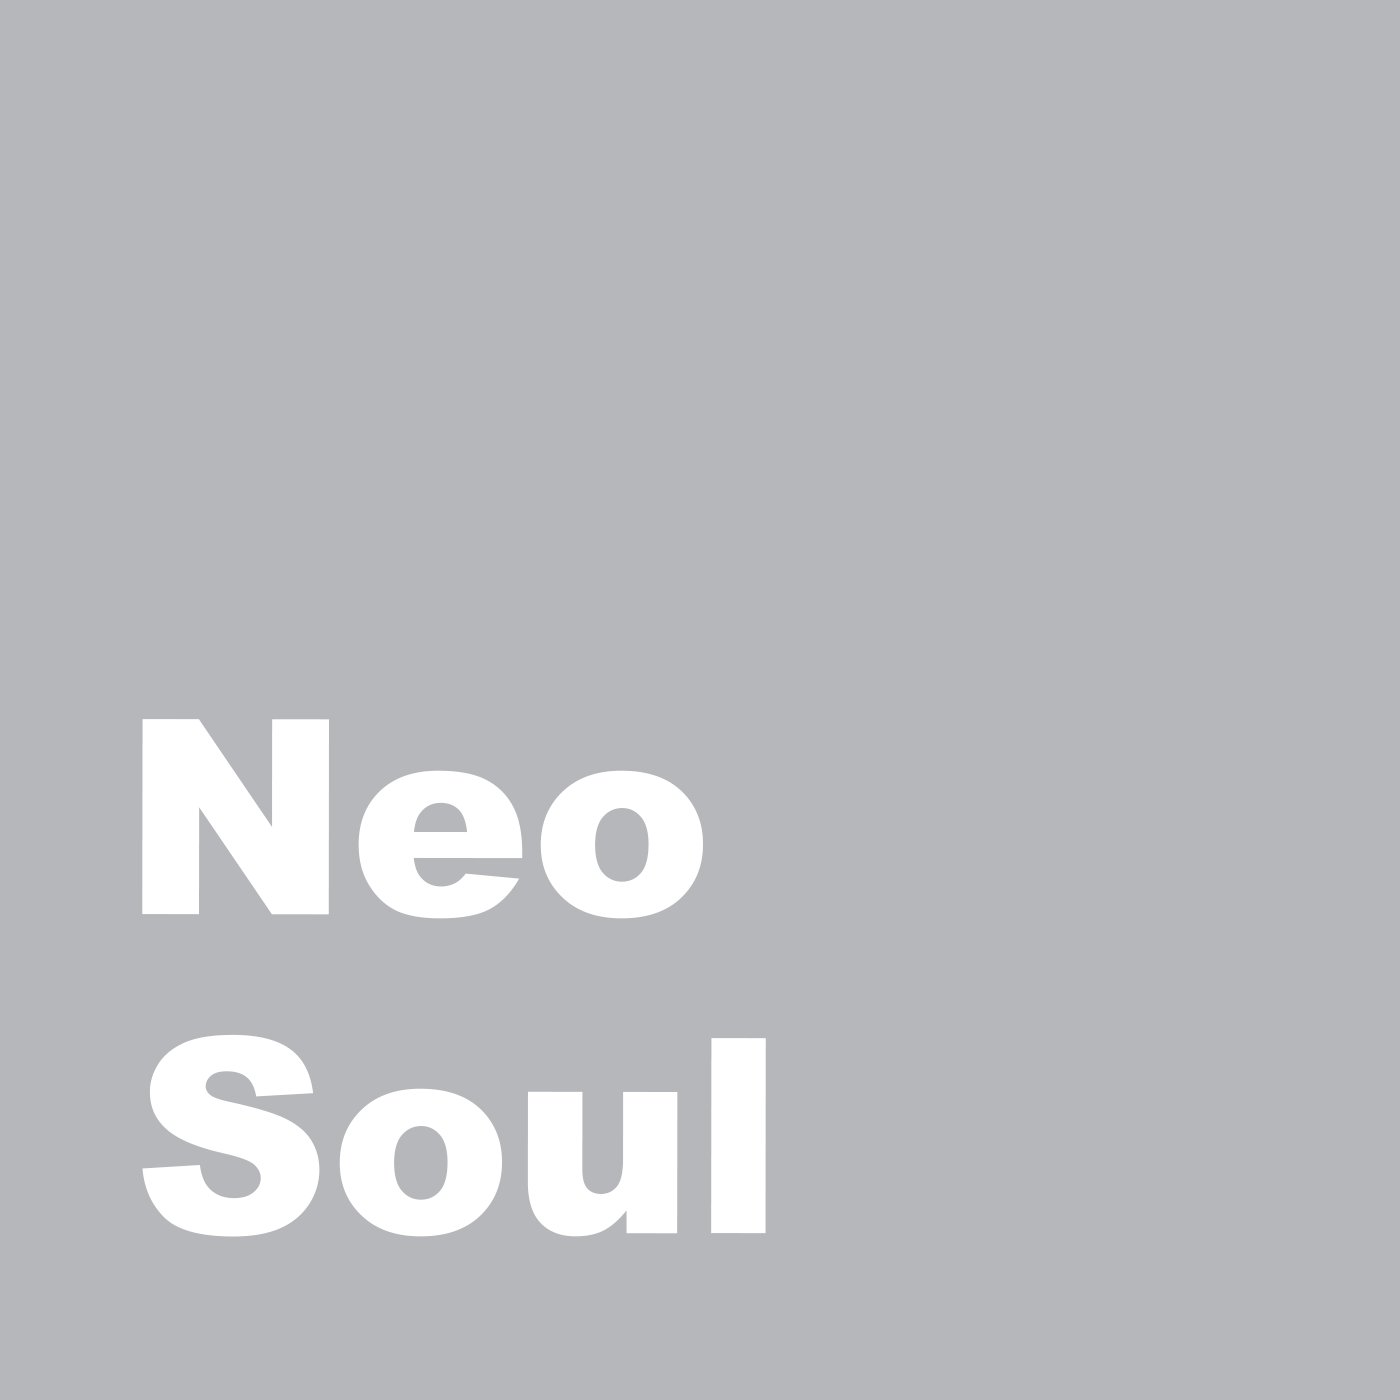 #67 Neo Soul 到底是什么？